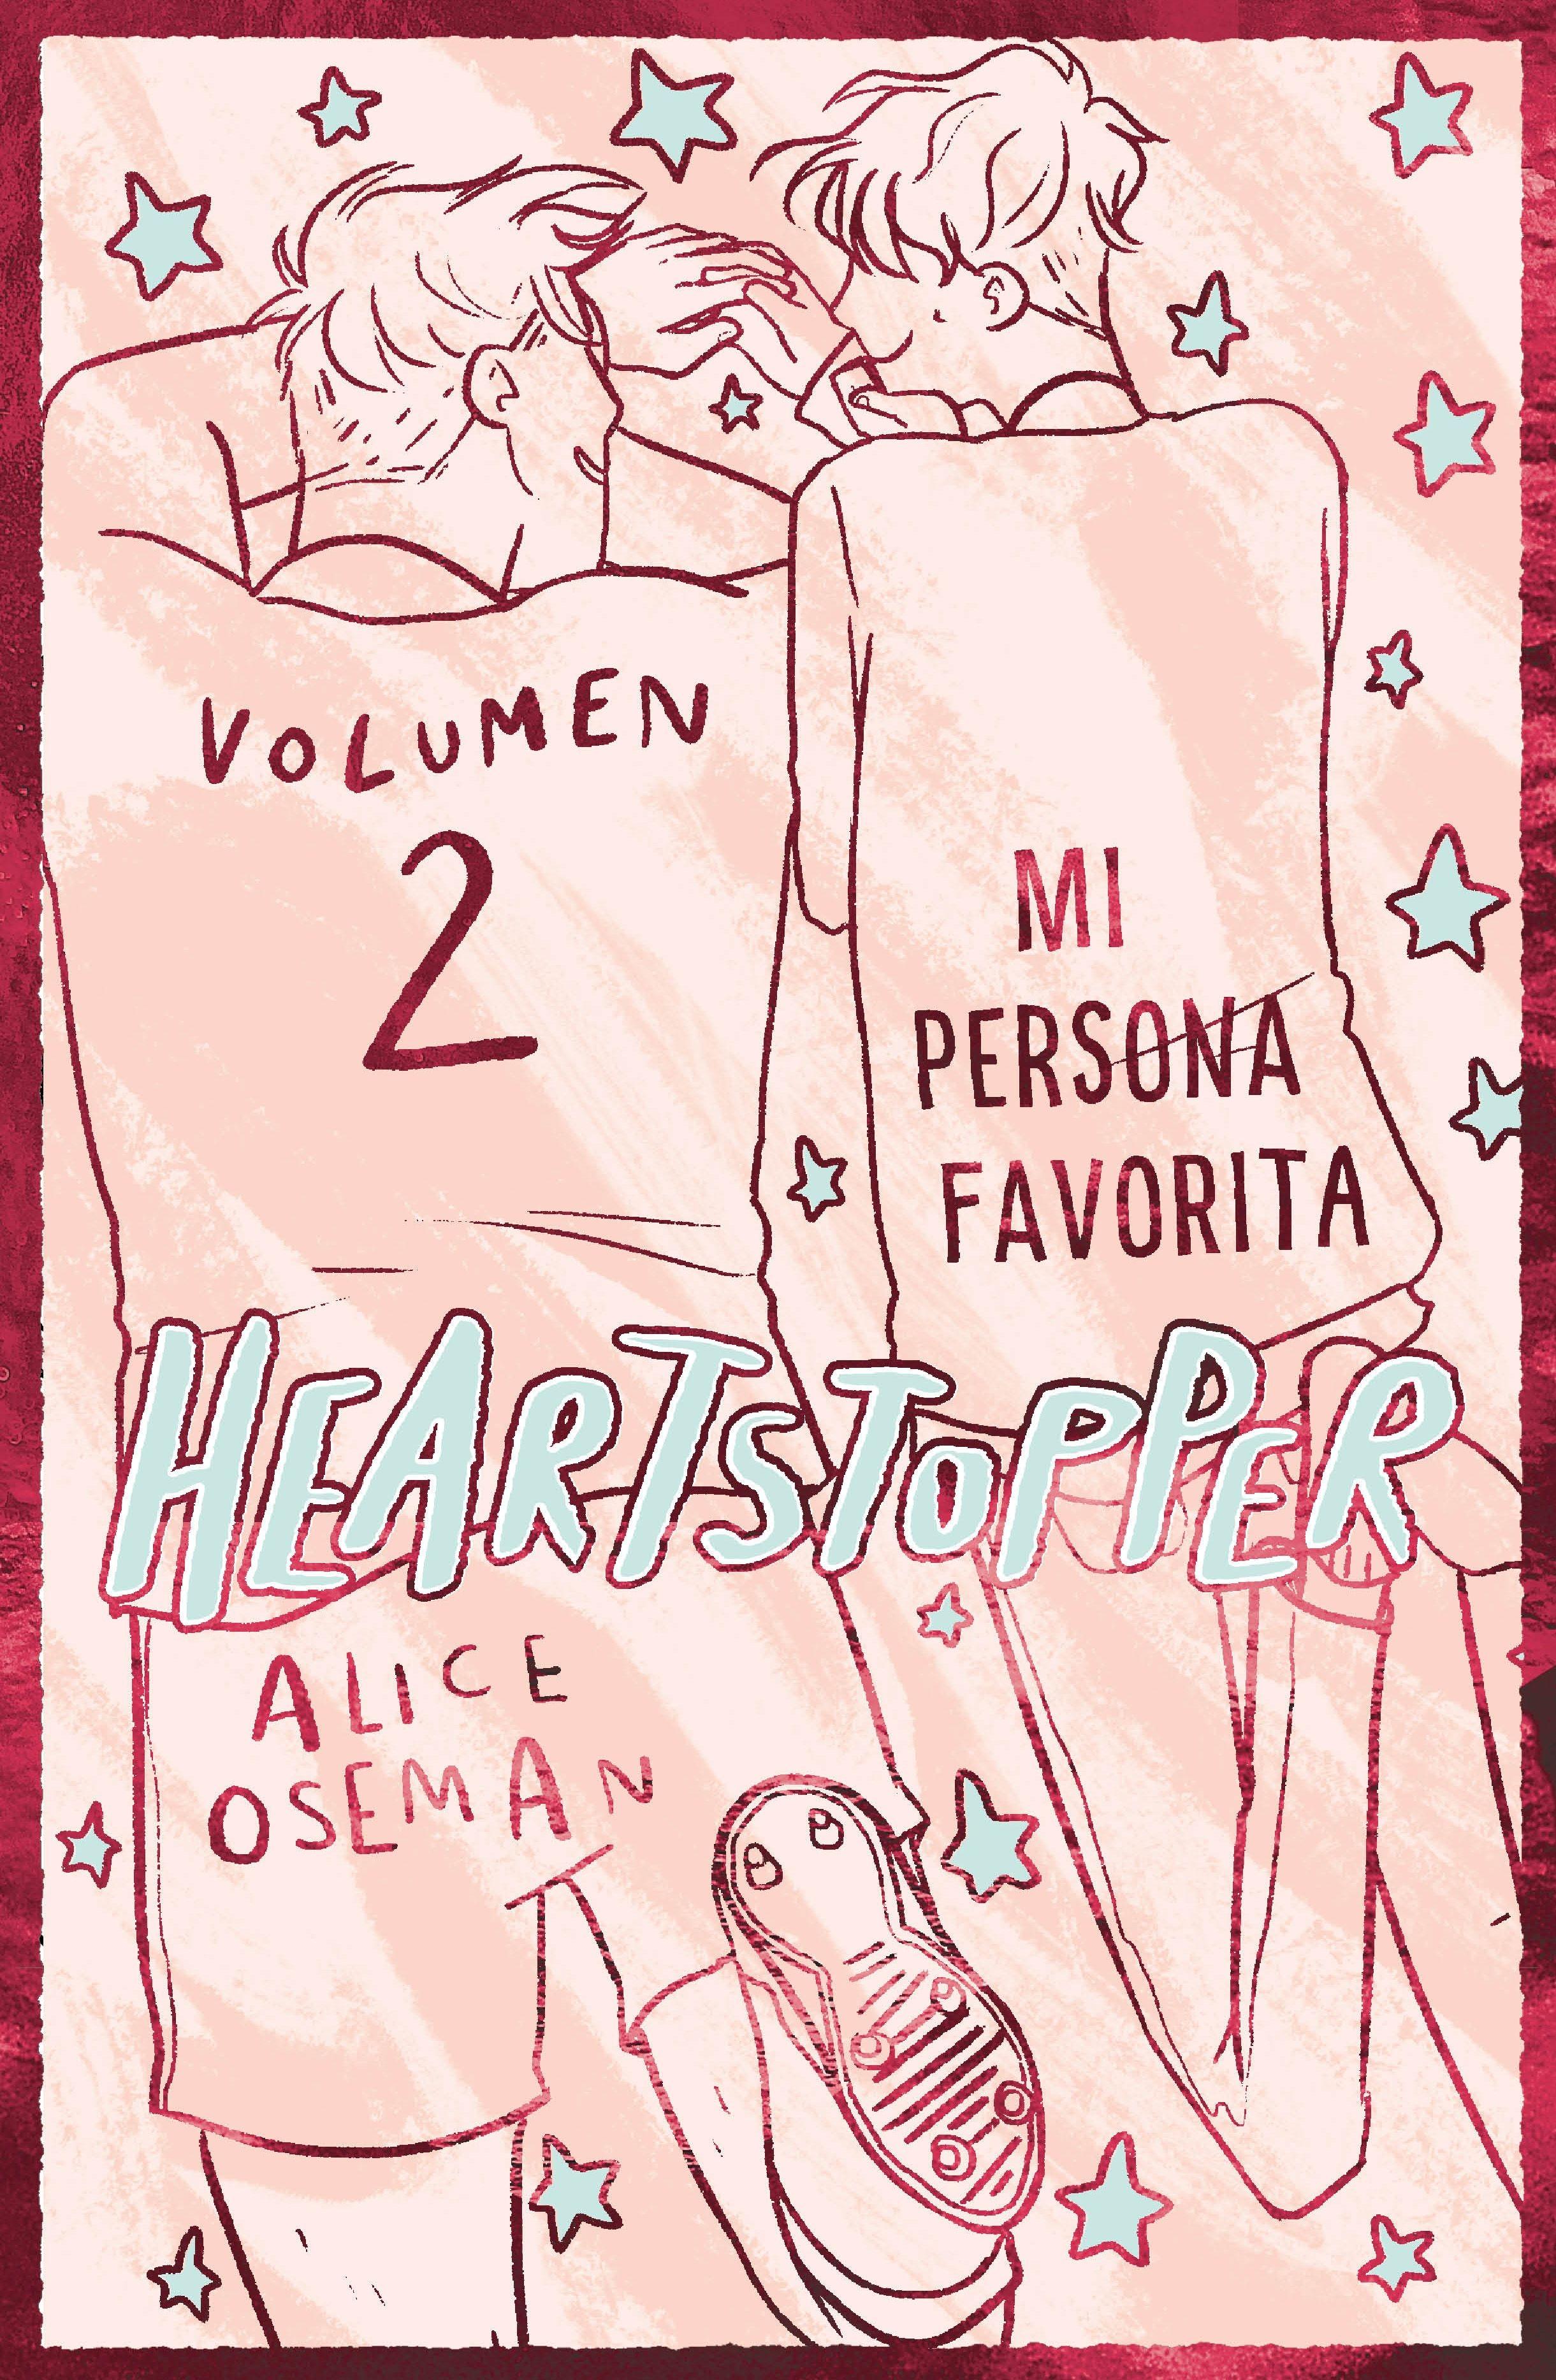 Heartstopper 2. mi Persona Favorita (Ed. Especial)